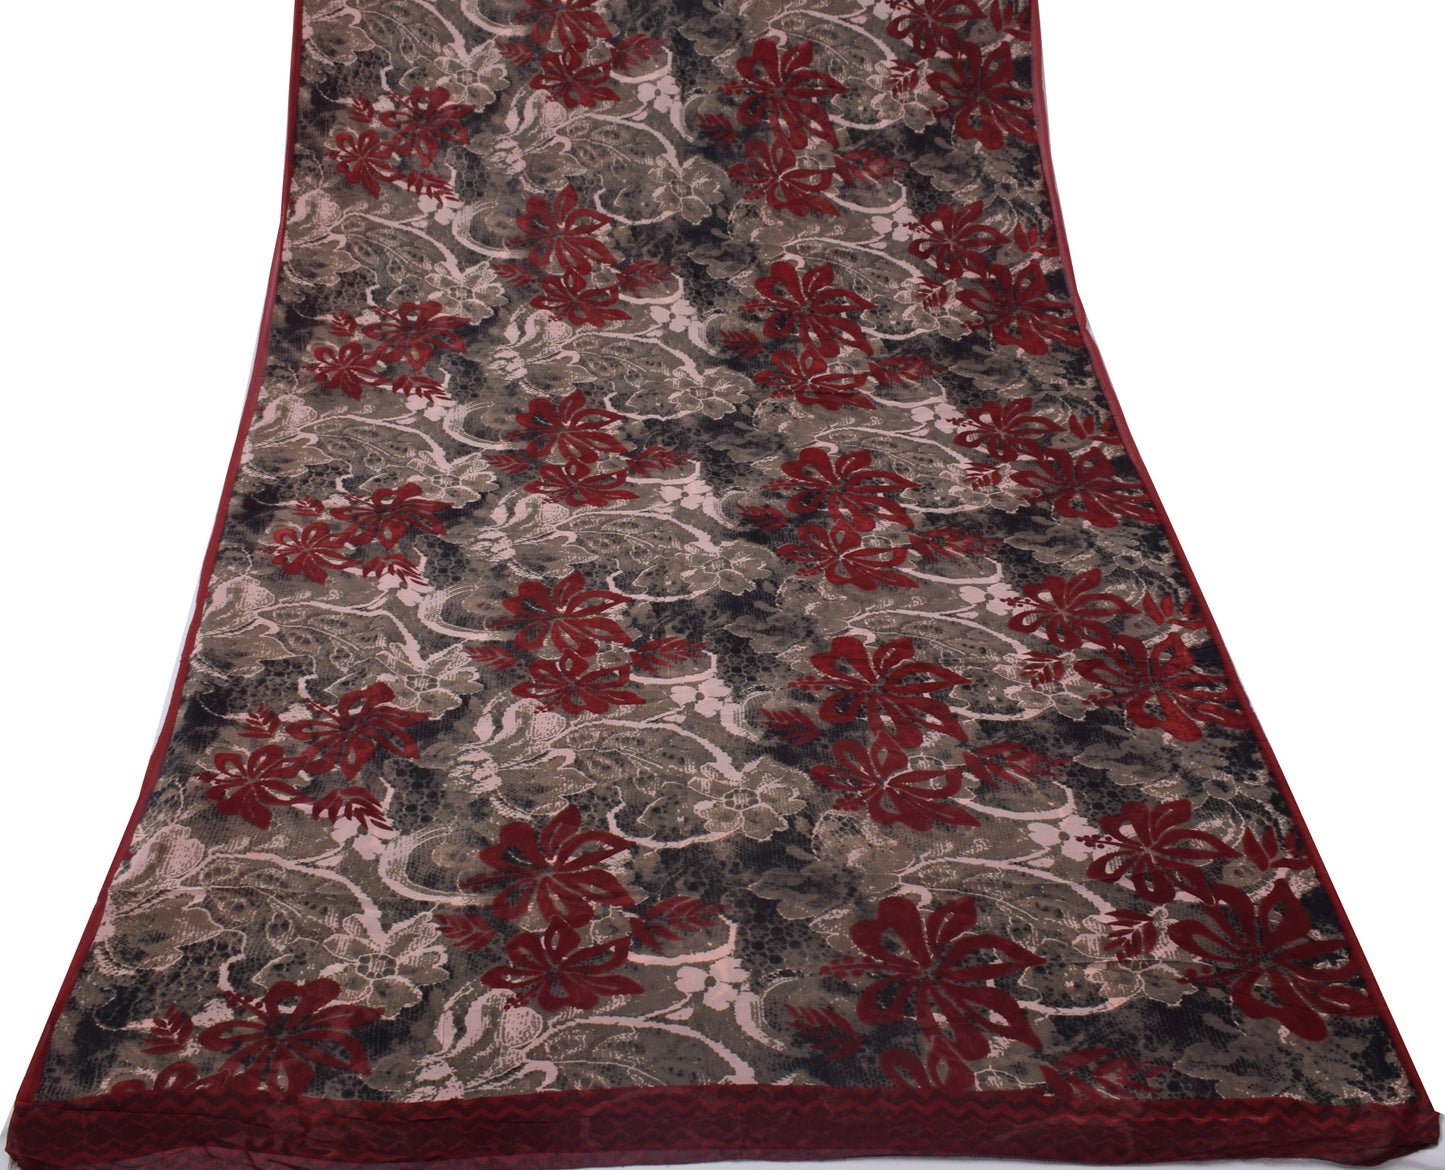 Sushila Vintage Multi-Color Sari Pure Georgette Silk Printed Floral Craft Fabric